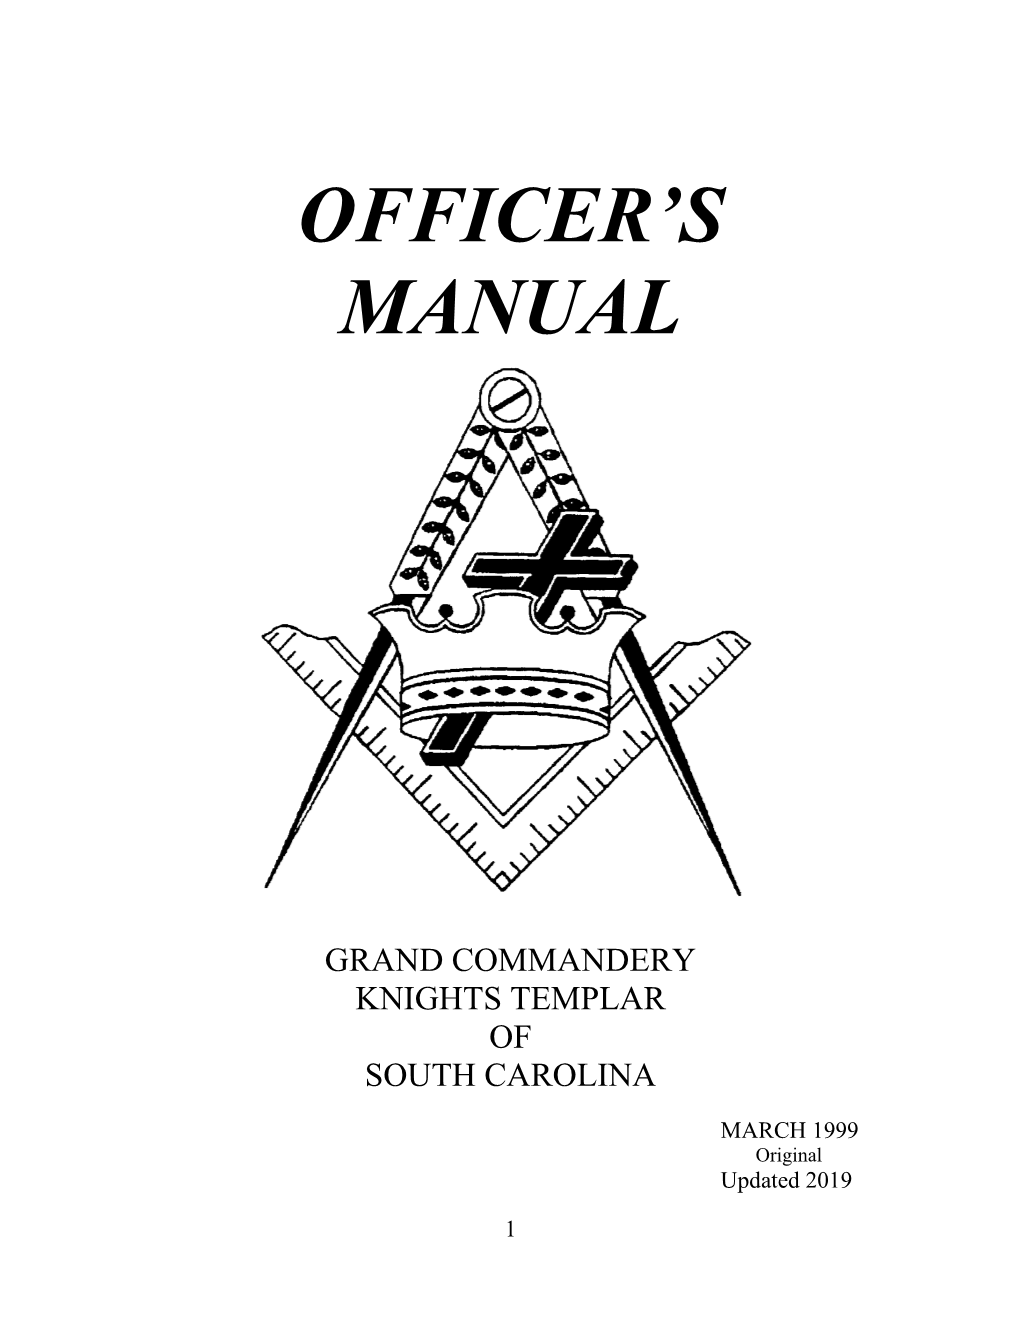 Officer's Manual